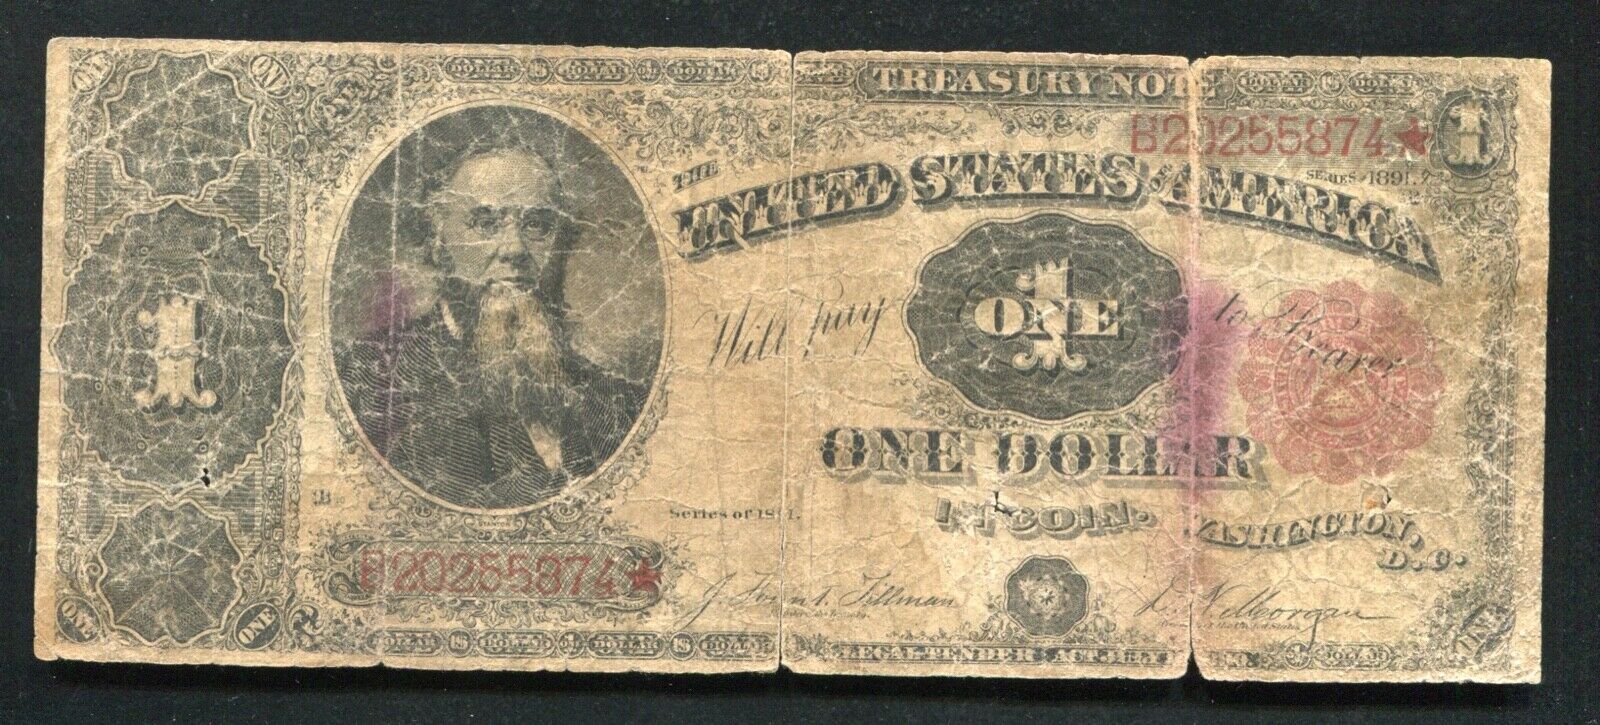 Fr. 351 1891 $1 One Dollar “stanton” Treasury Note U.s. Currency (b)